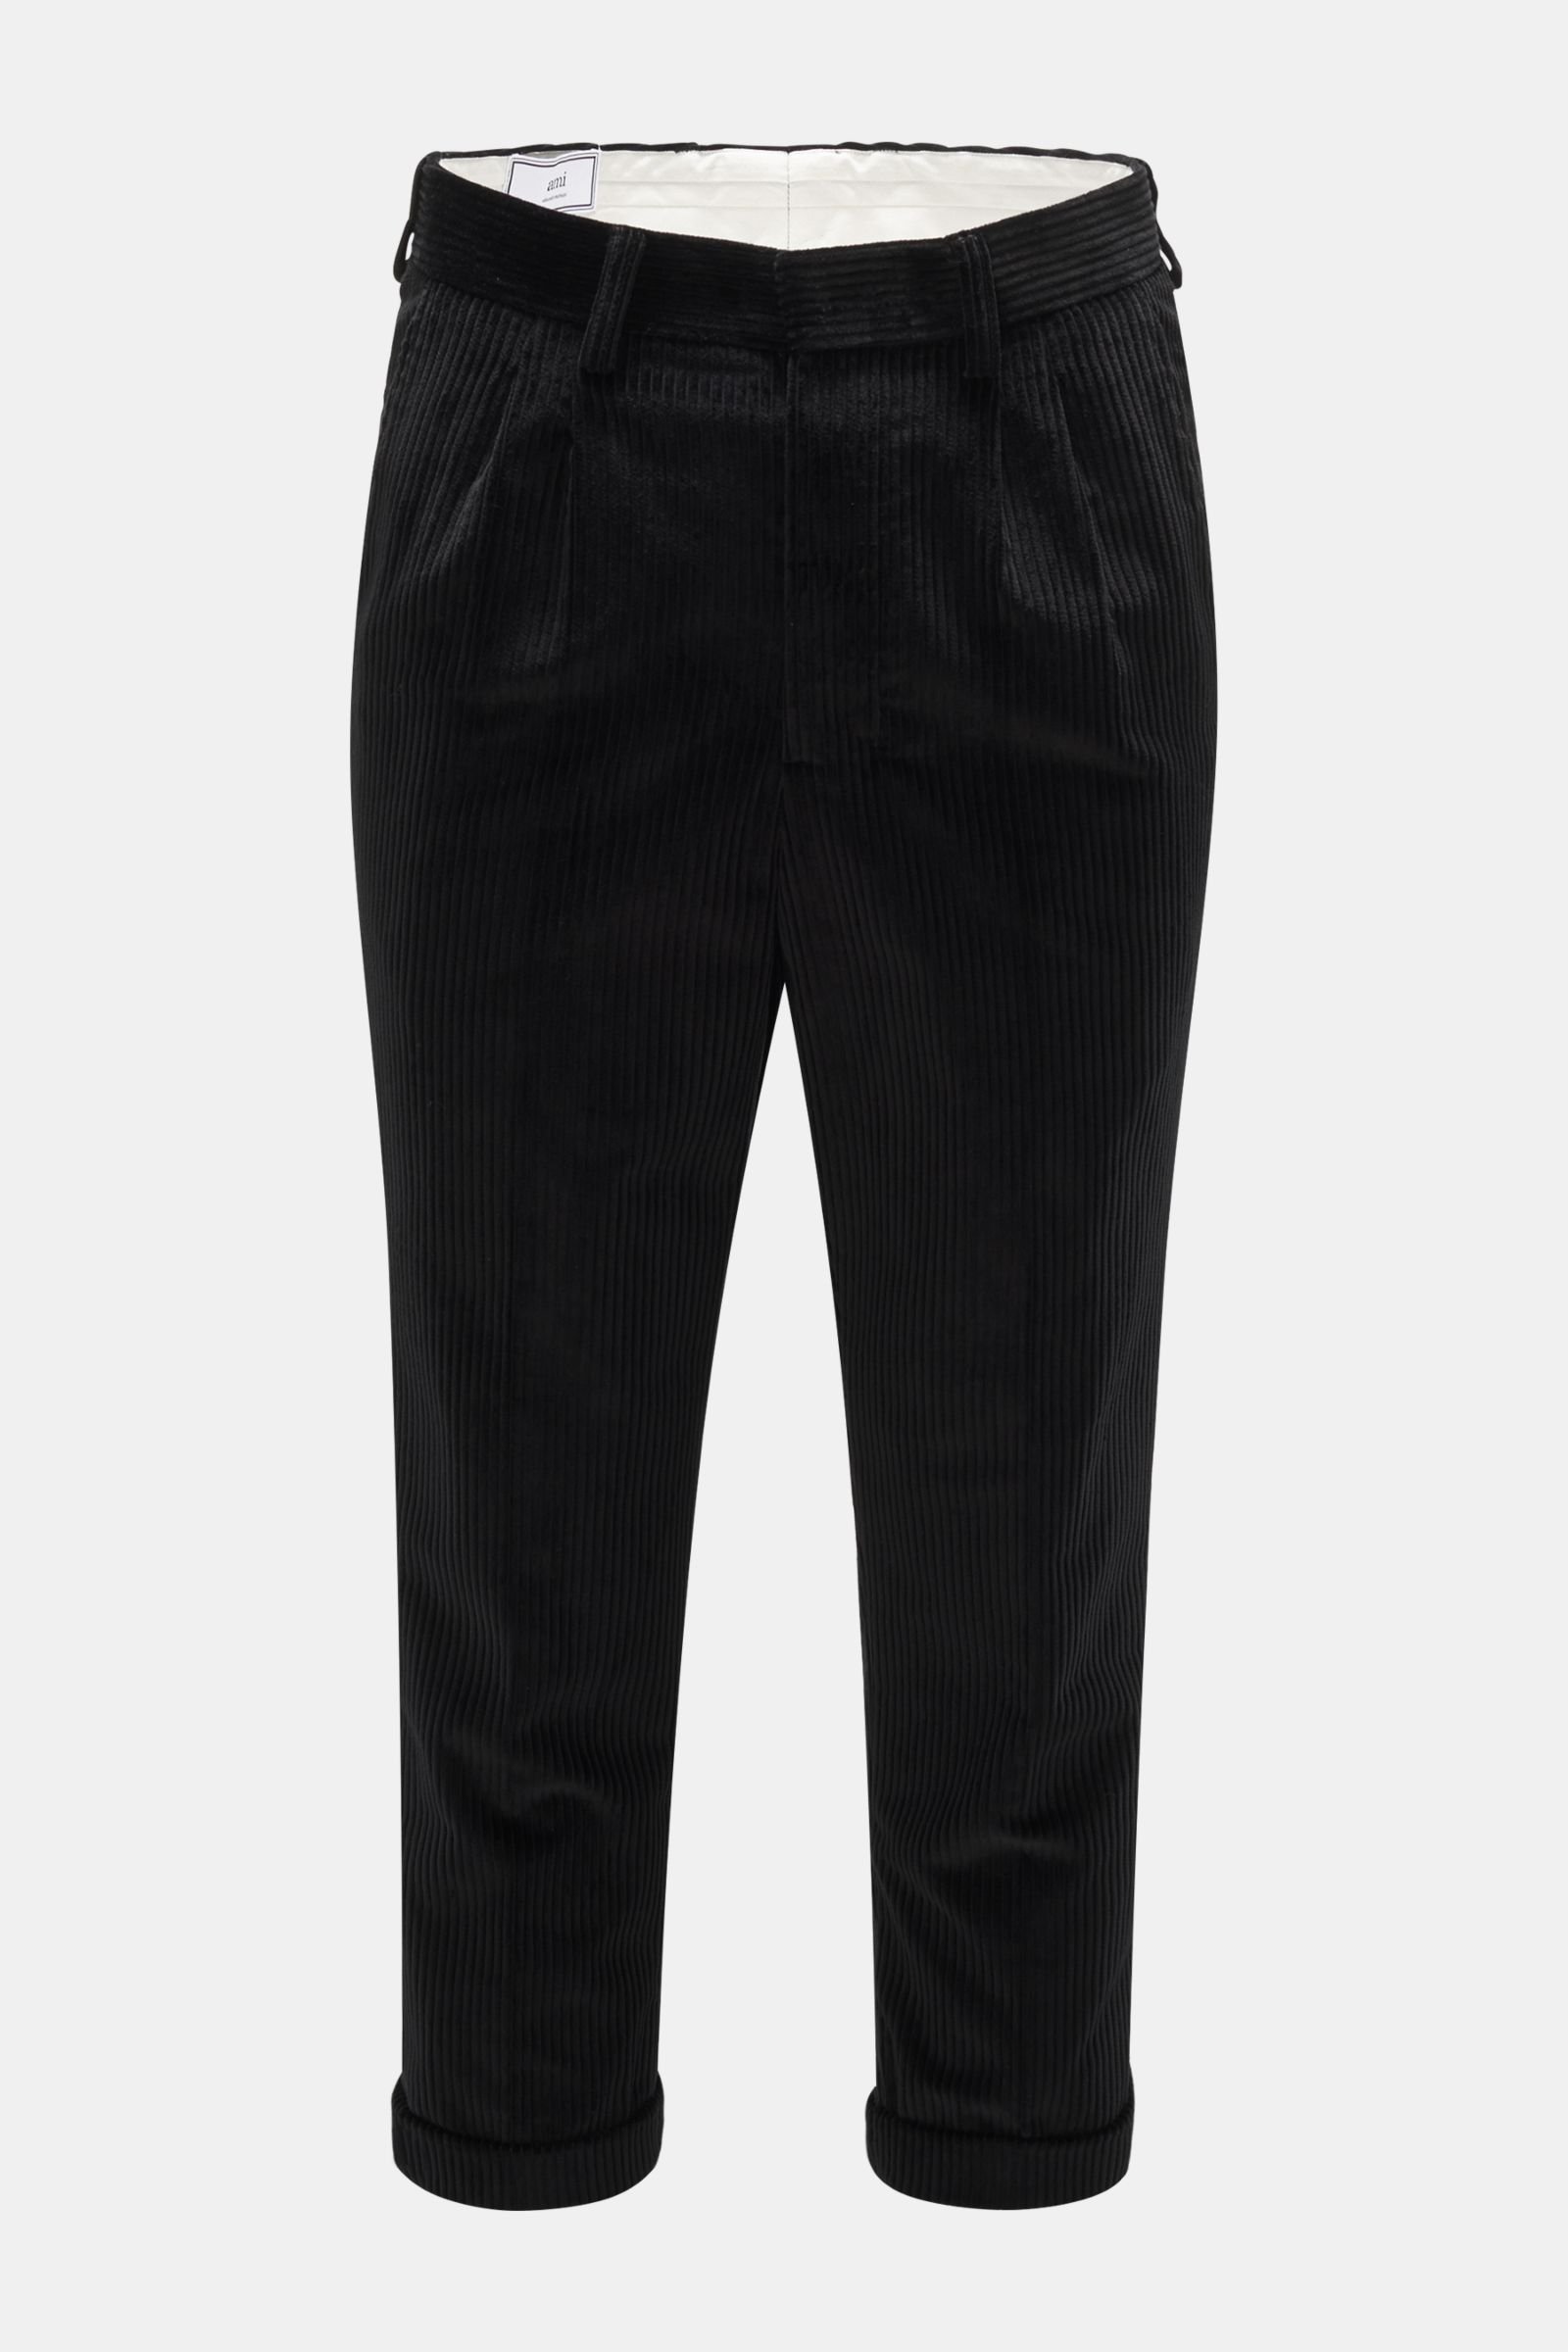 Corduroy trousers black